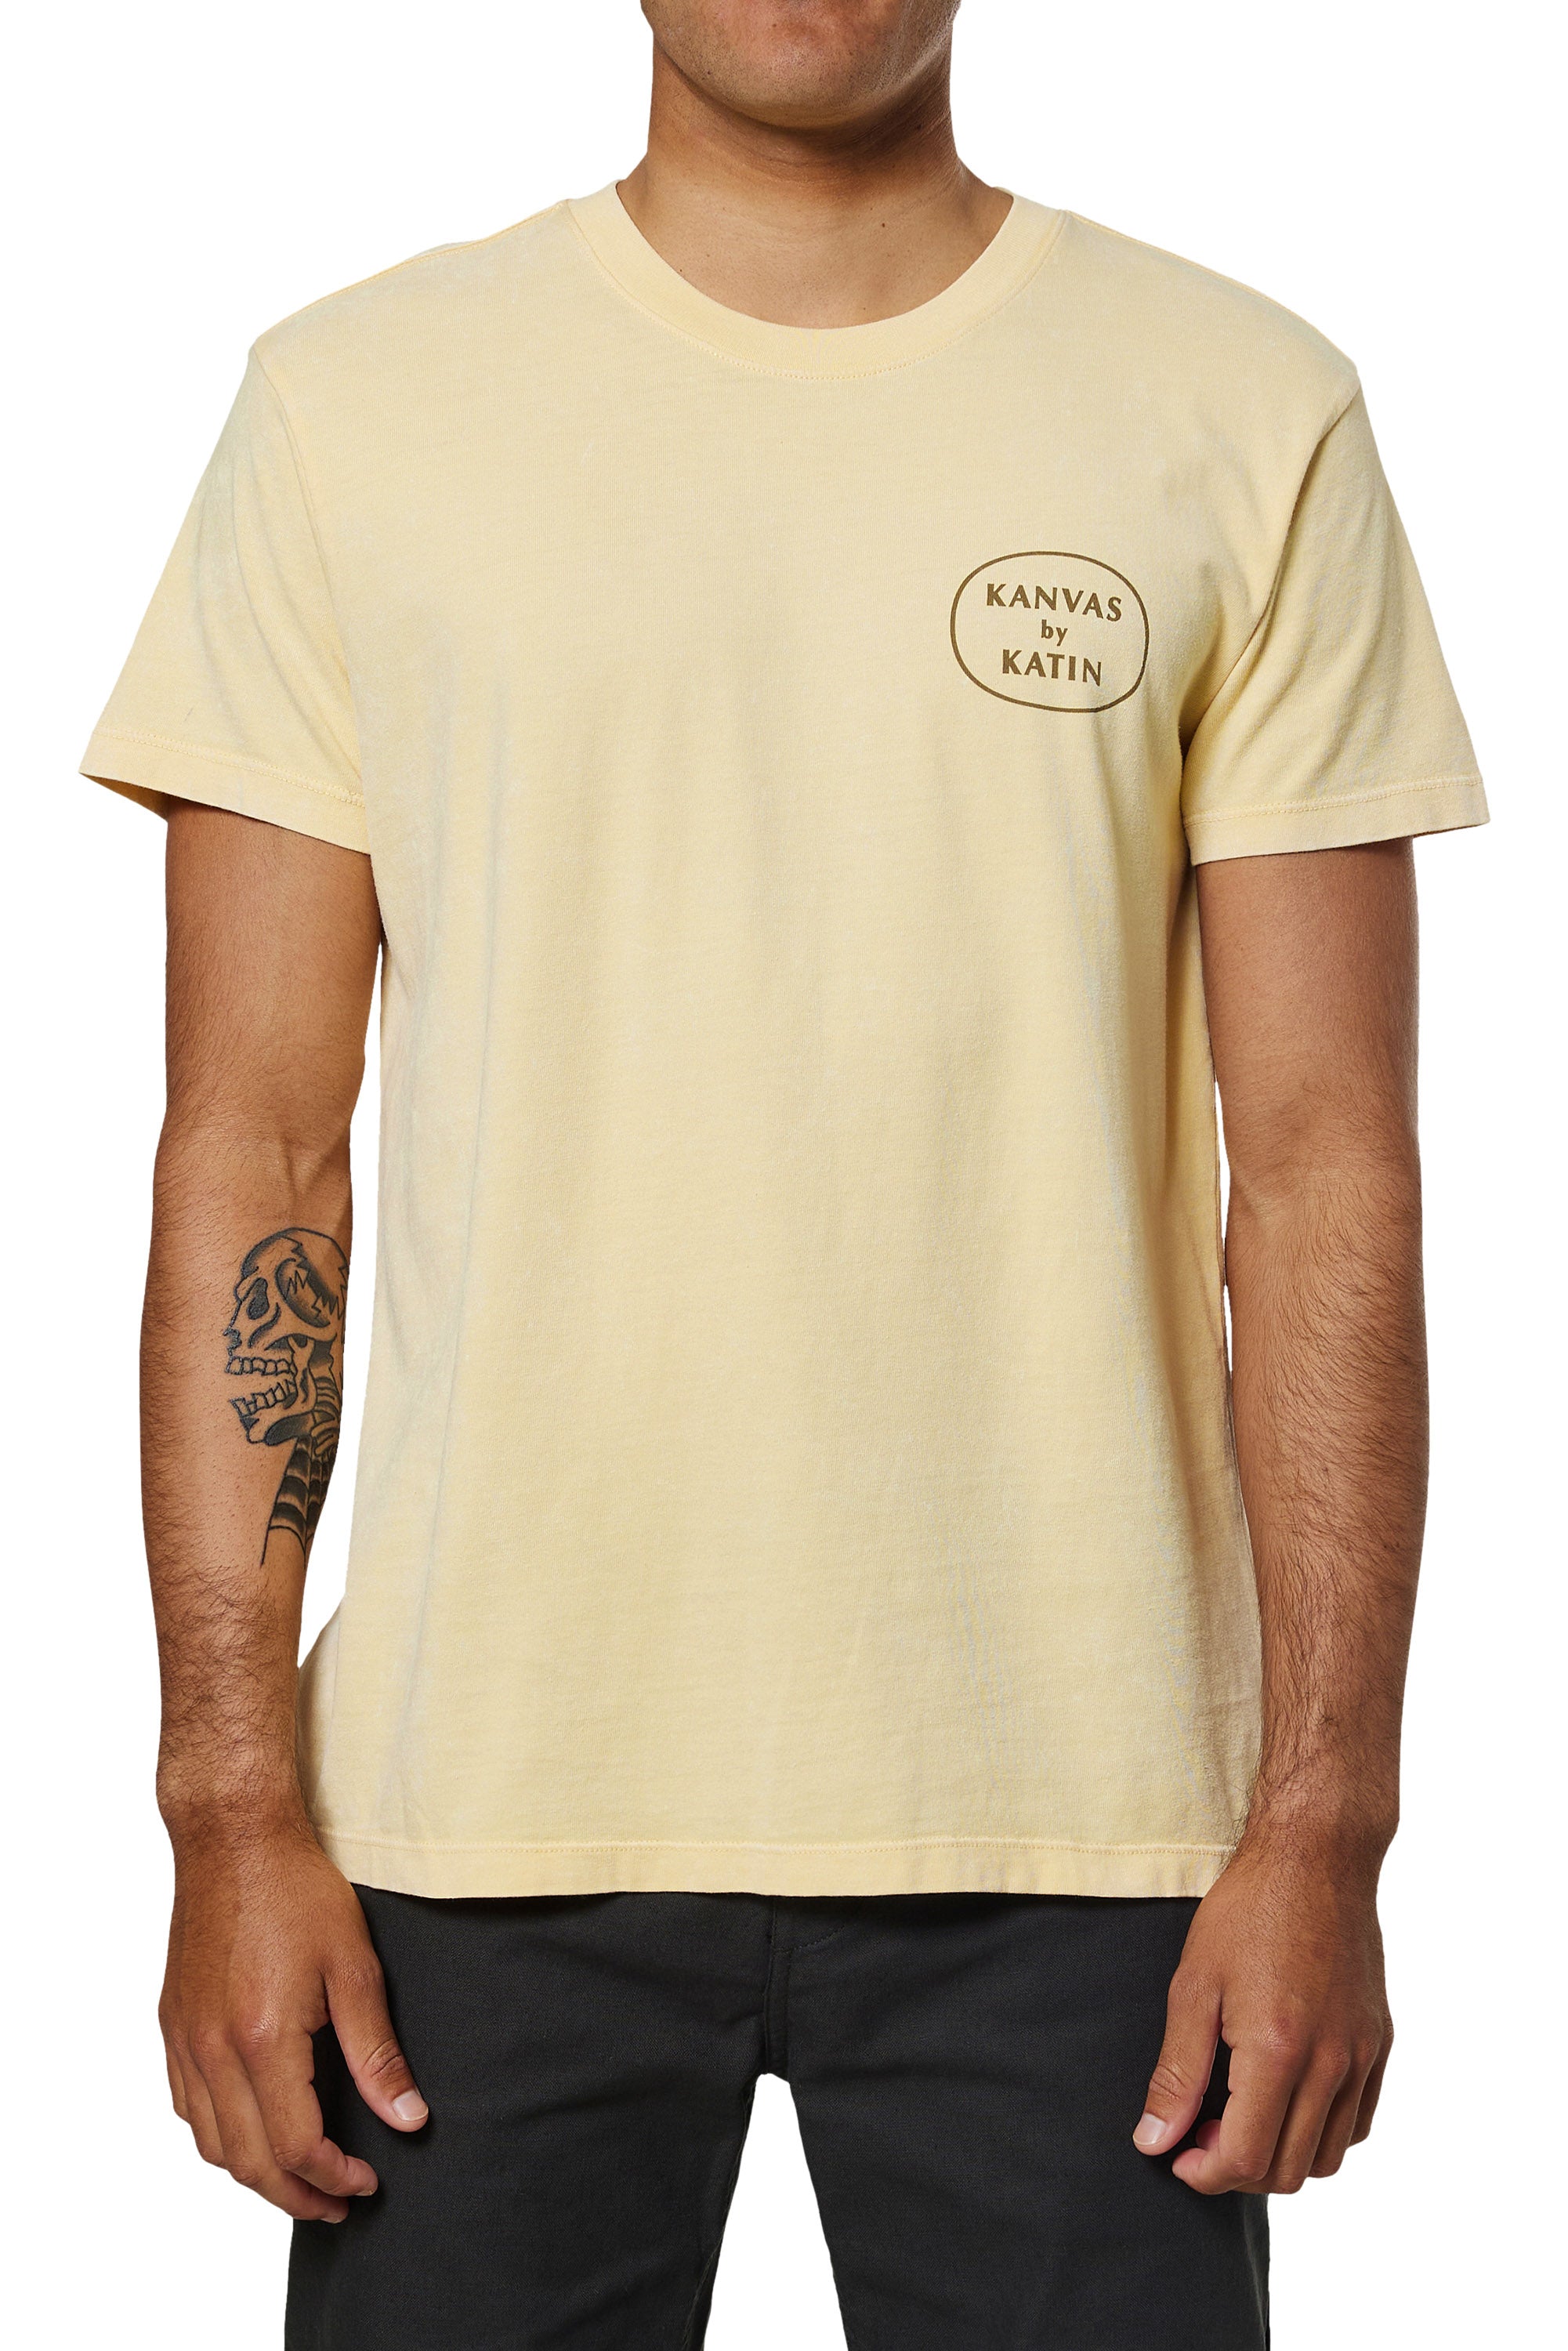 Trimmen-T-Shirt | Katin USA